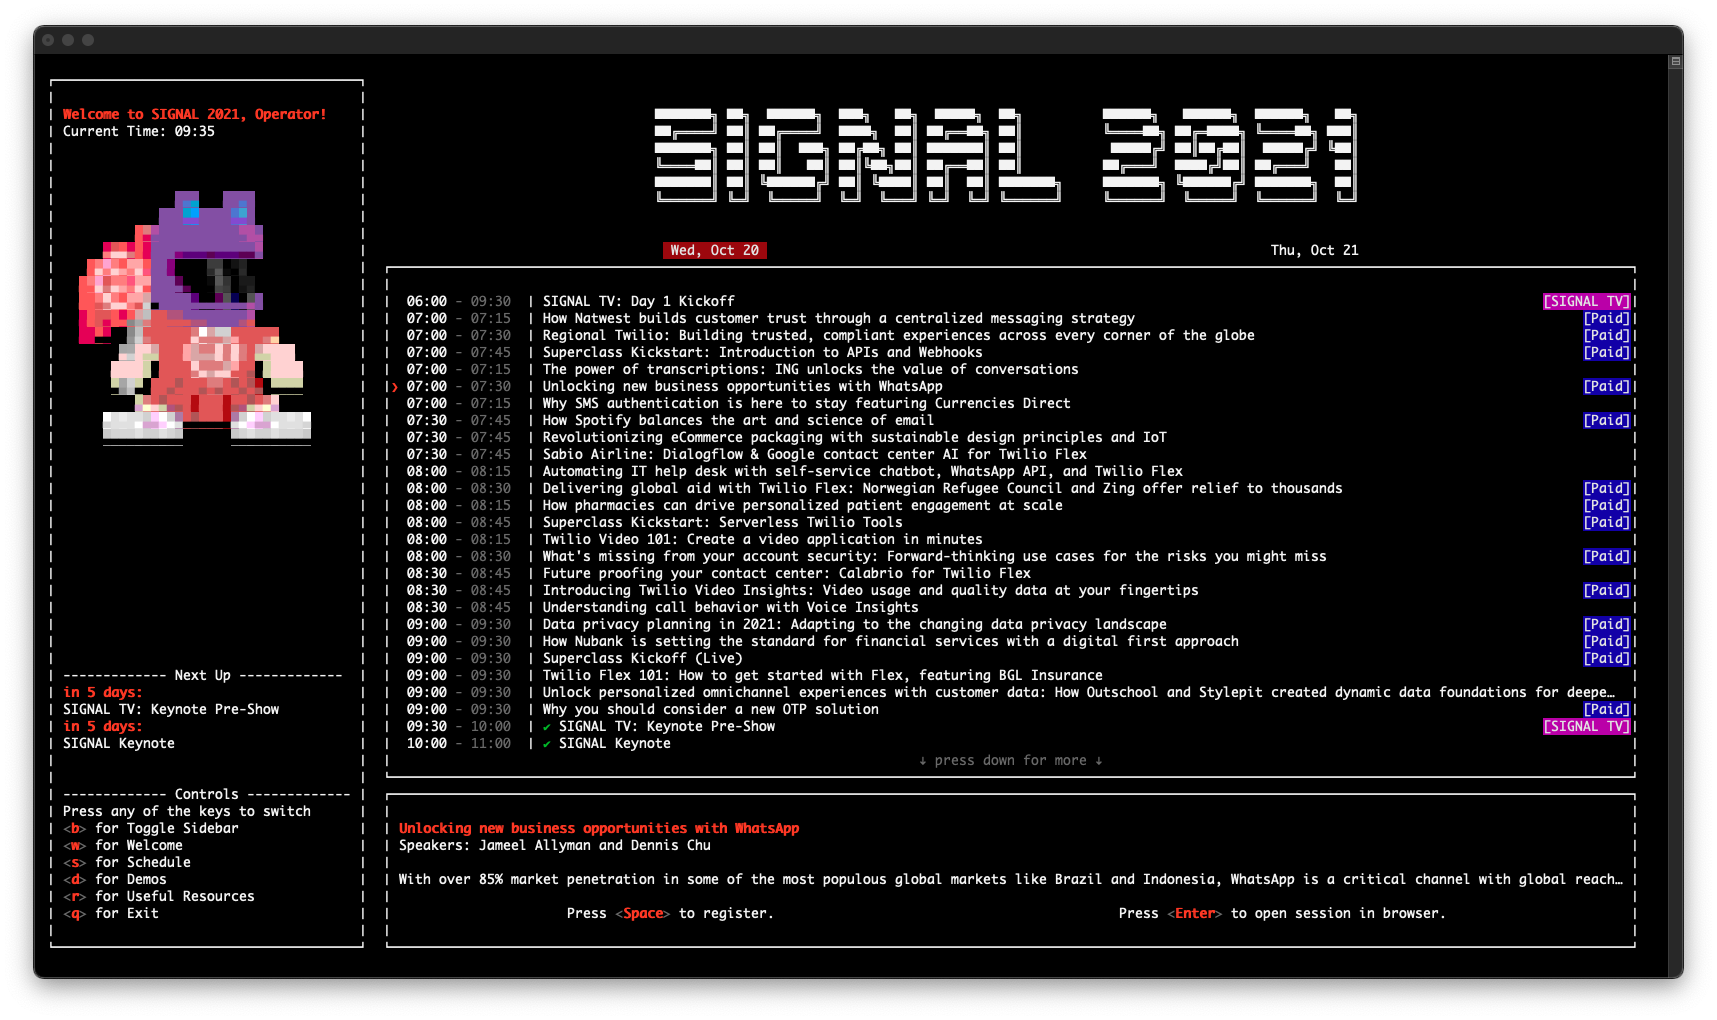 Screenshot of the schedule view in Developer Mode